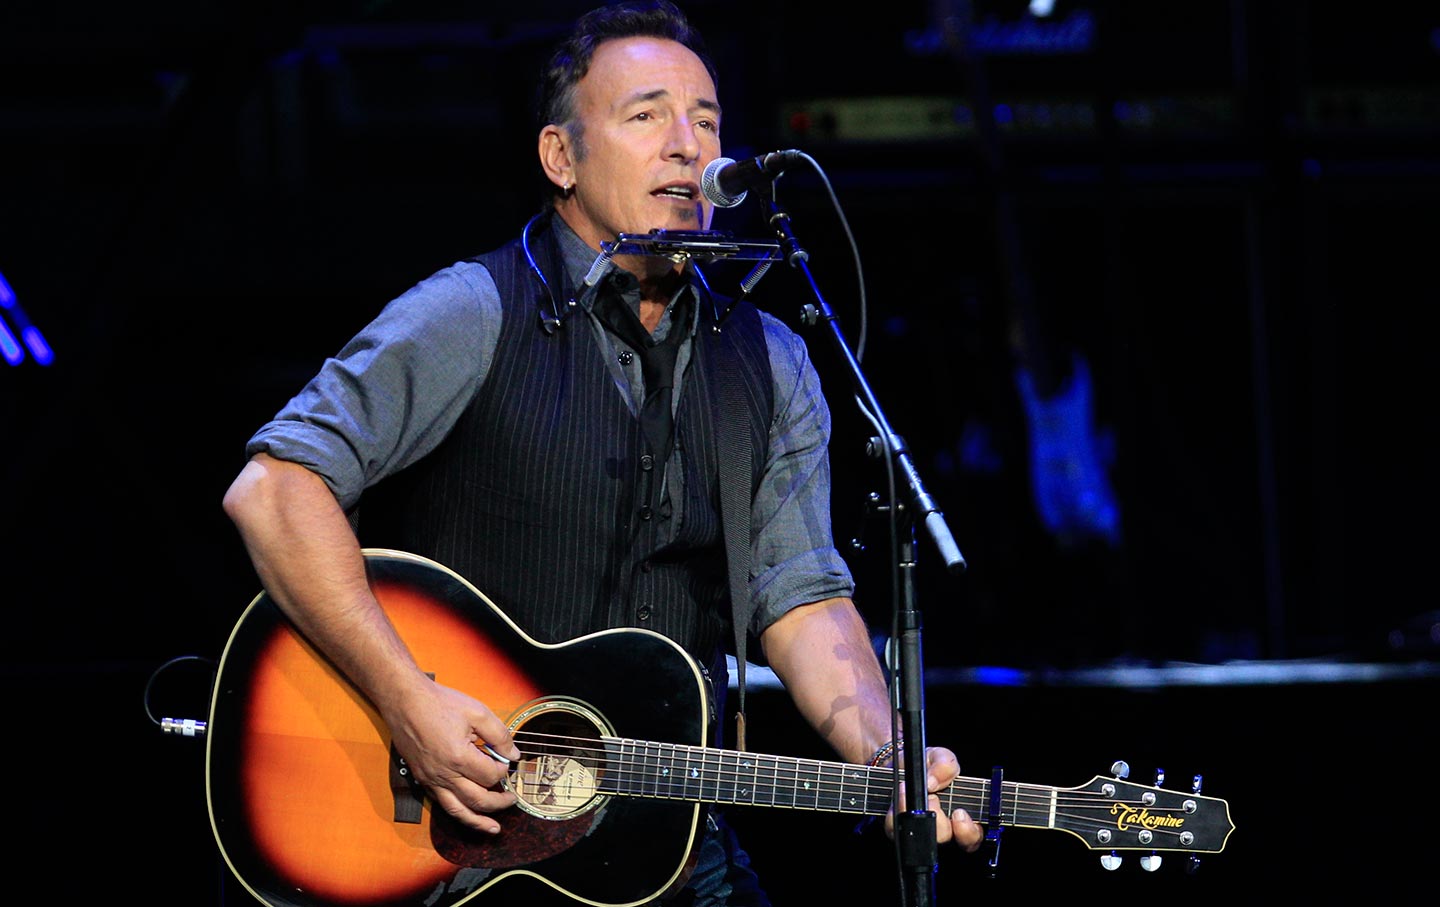 Bruce Springsteen ightψος, βάρος, ηλικία, στατιστικές σώματος